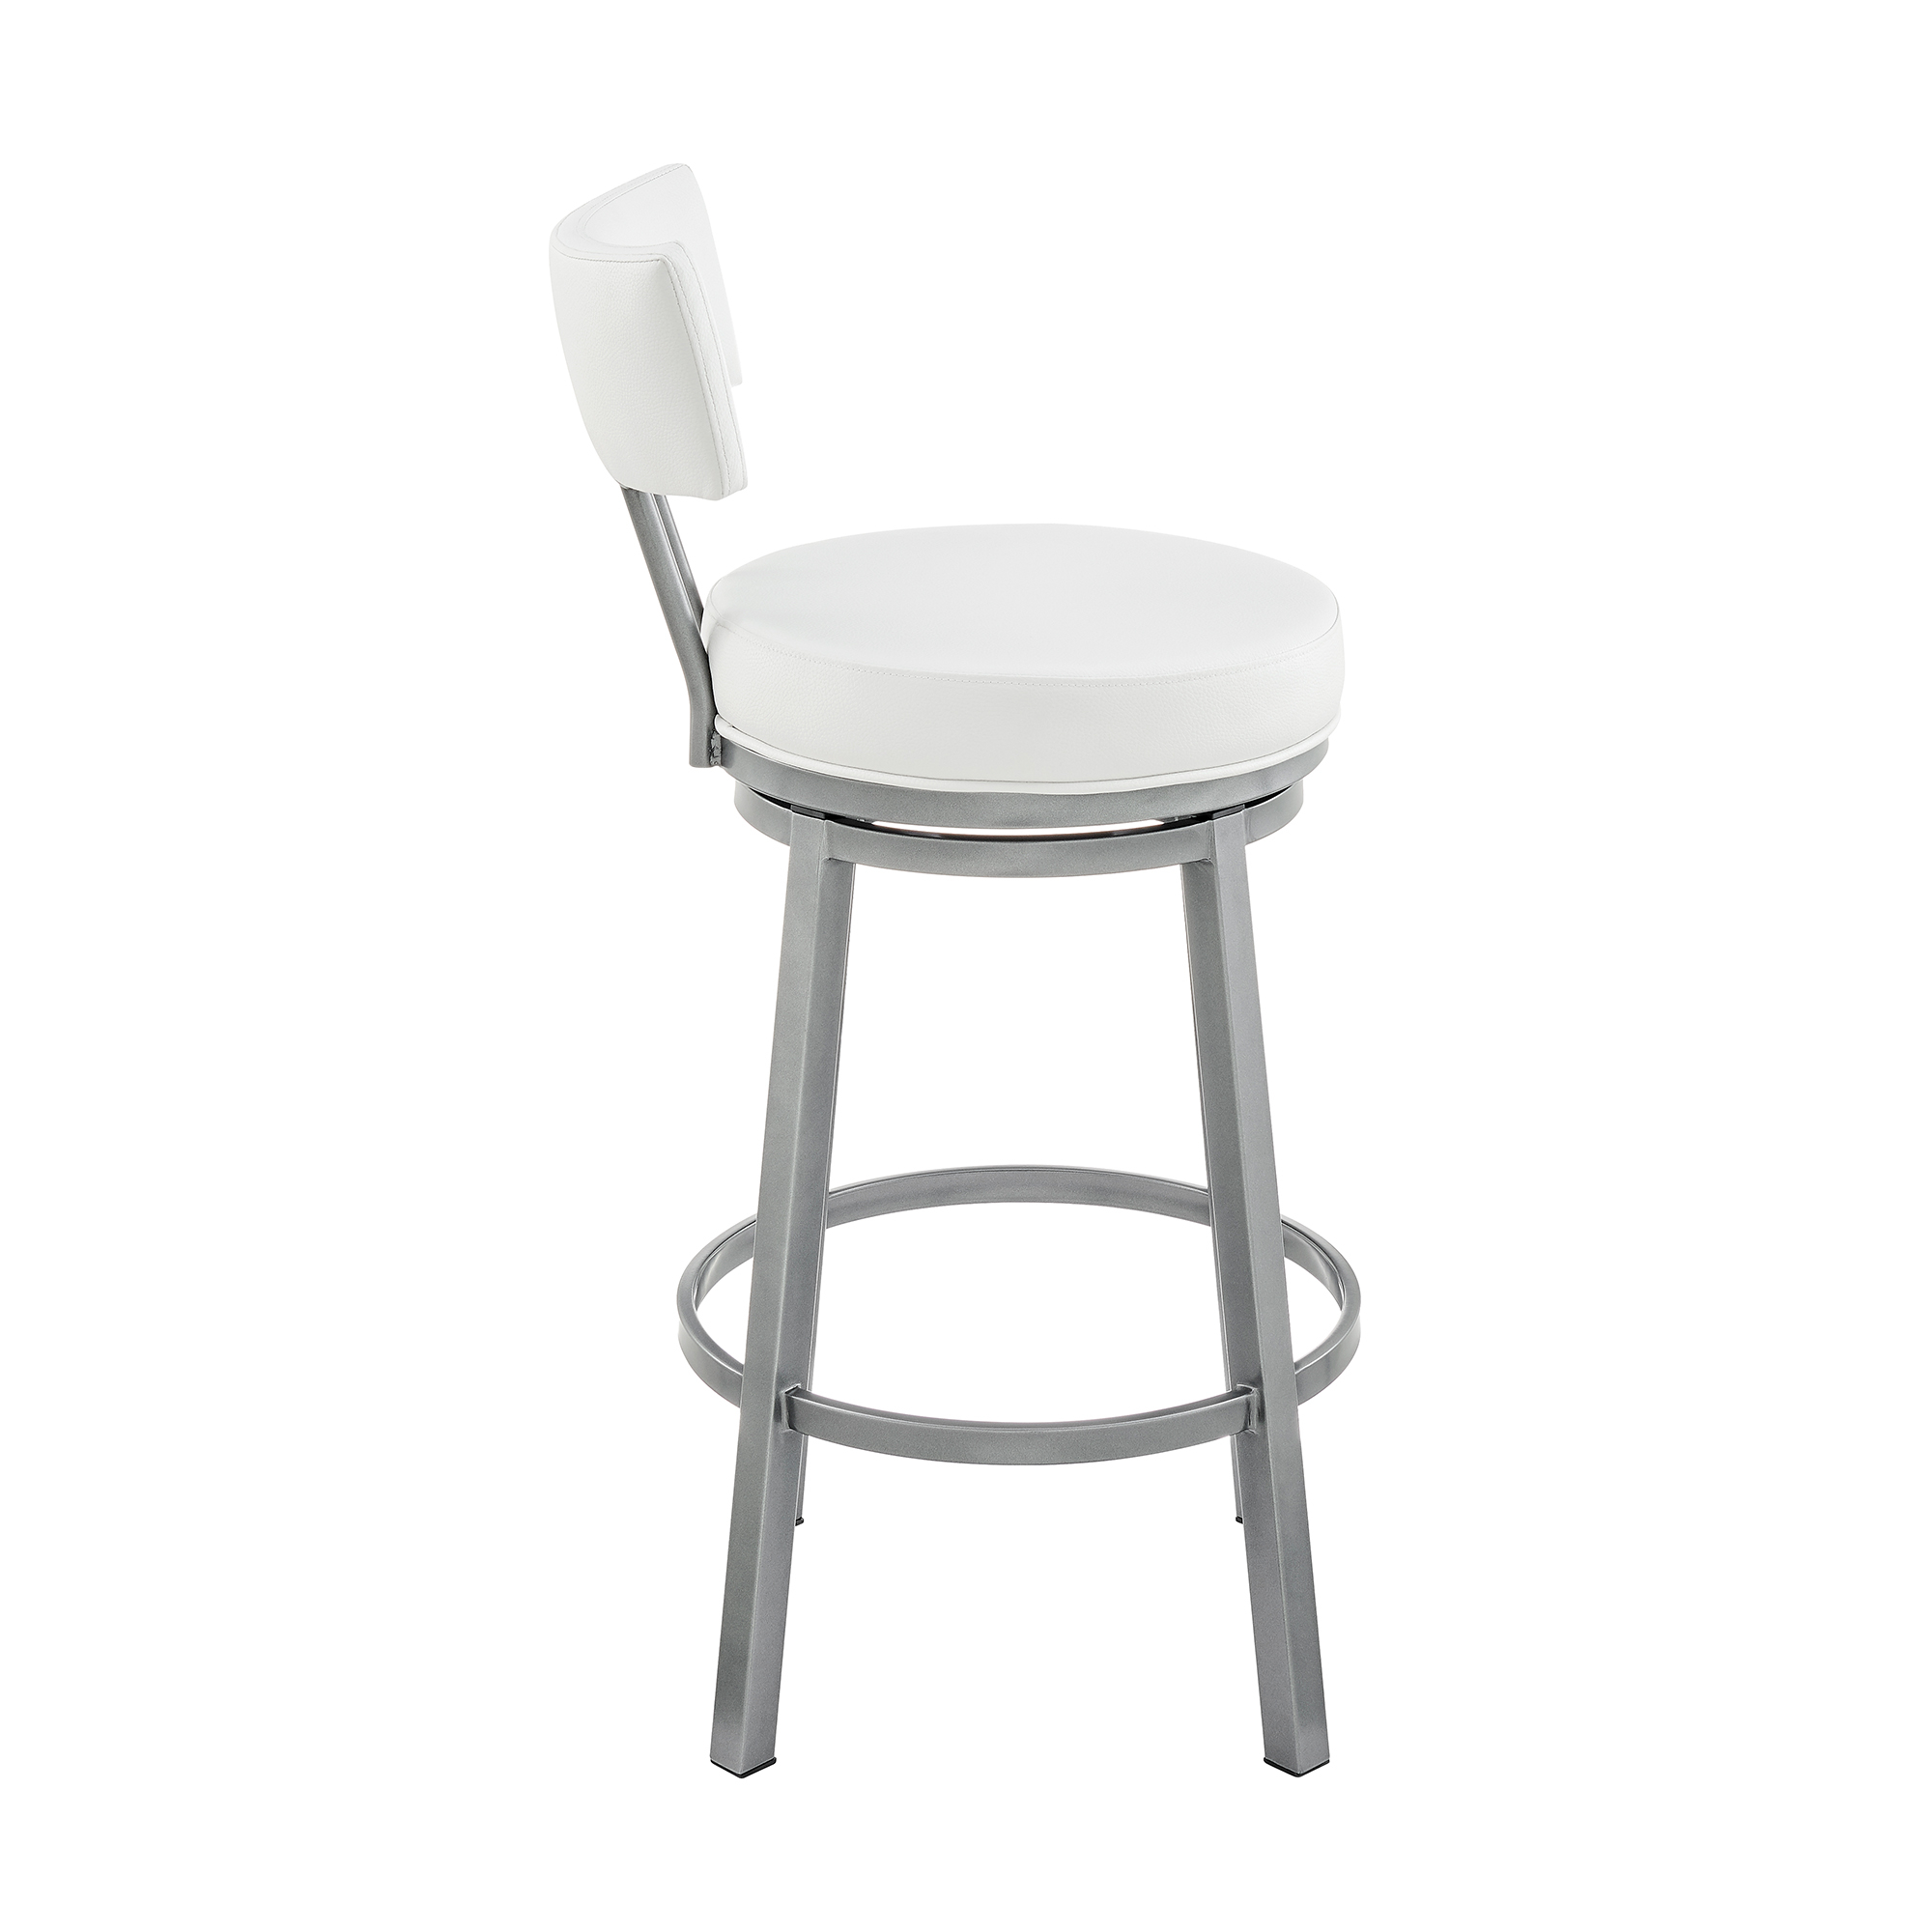 Eleanor 30 Inch Swivel Bar Stool Chair, Gray, Round White Faux Leather Seat- Saltoro Sherpi